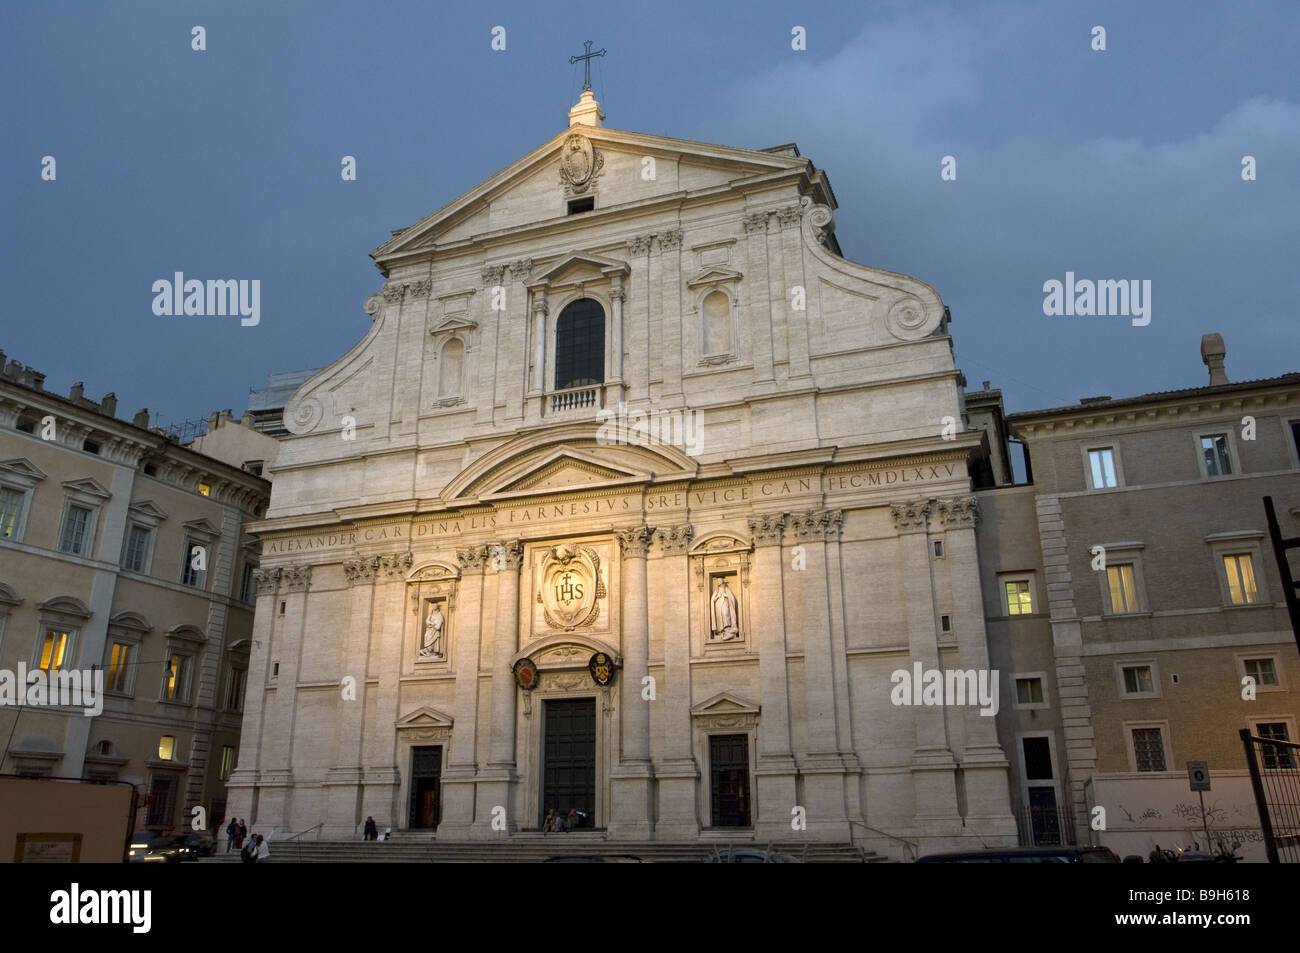 Italy Rome church Il Gesù facade Stock Photo - Alamy